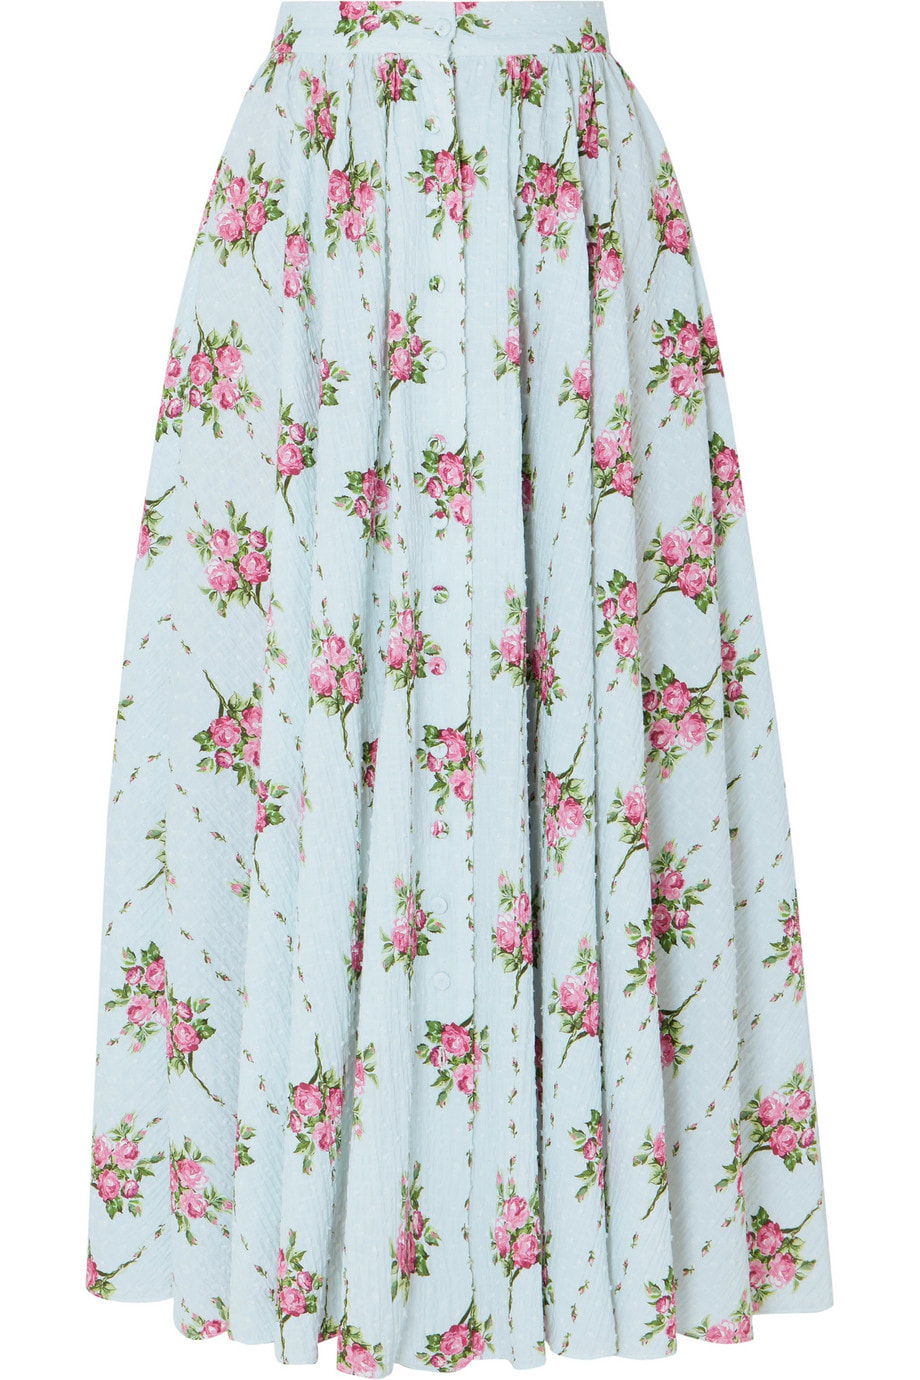  Emilia Wickstead Floral-print Swiss-dot cotton-blend seersucker midi skirt